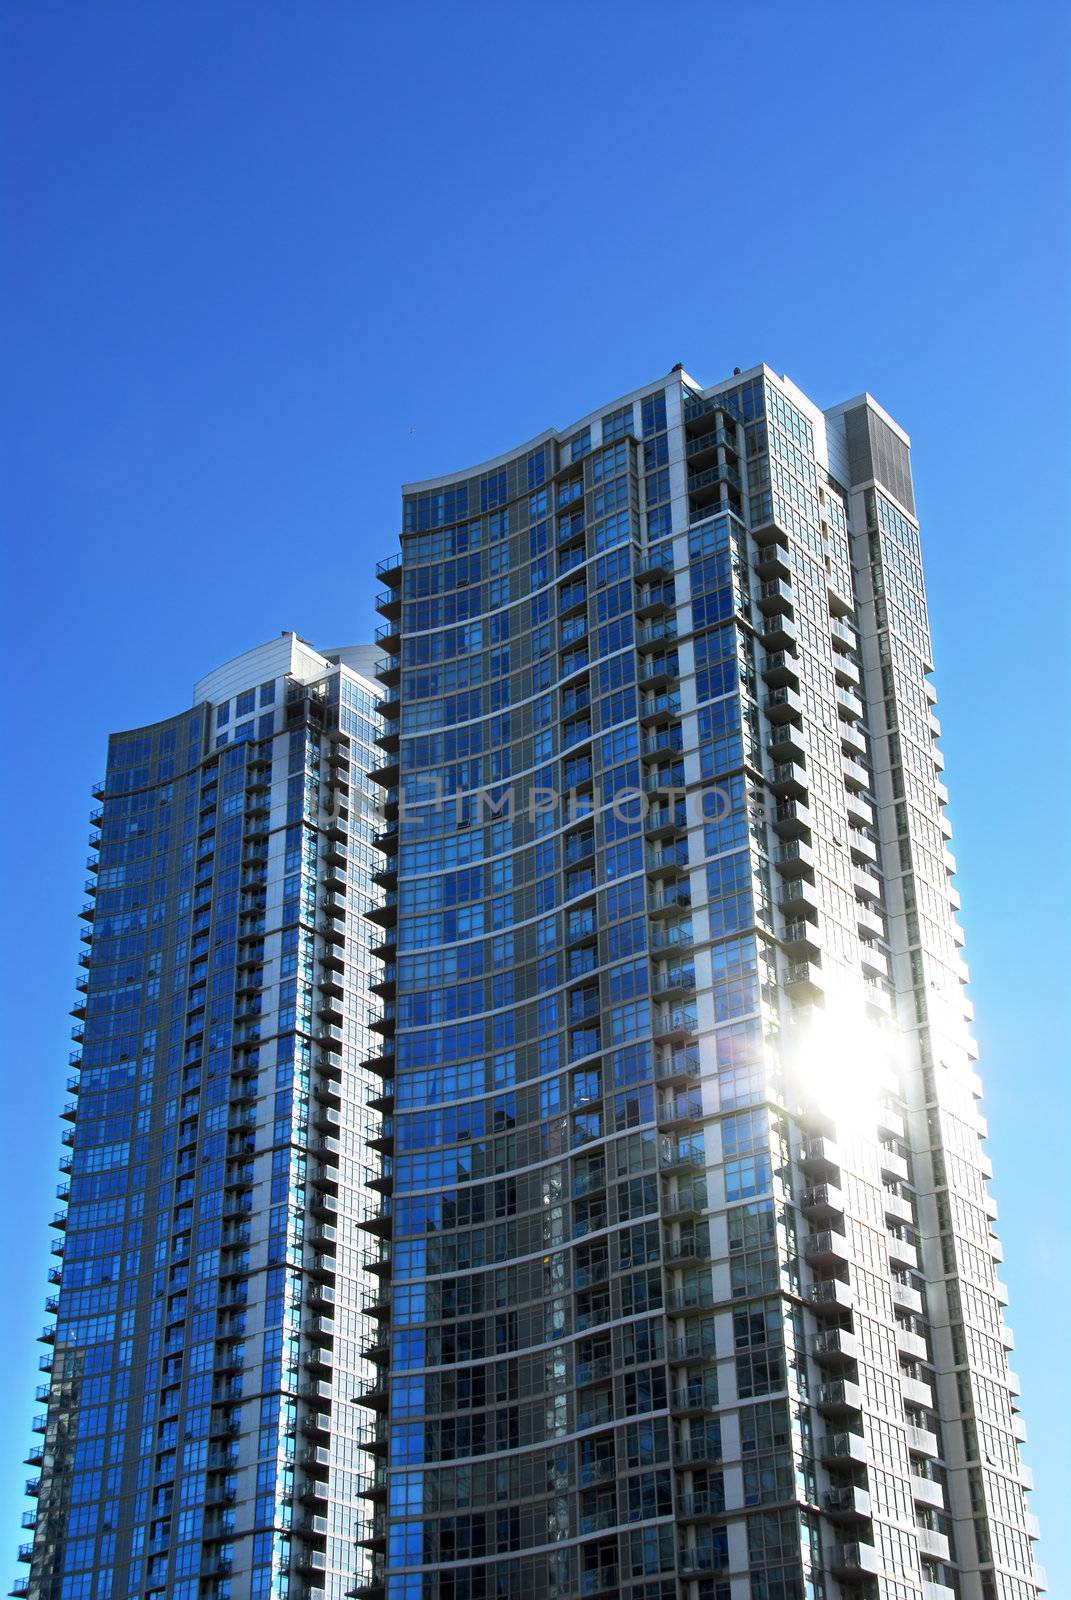 Highrise buildings of a modern condominium complex